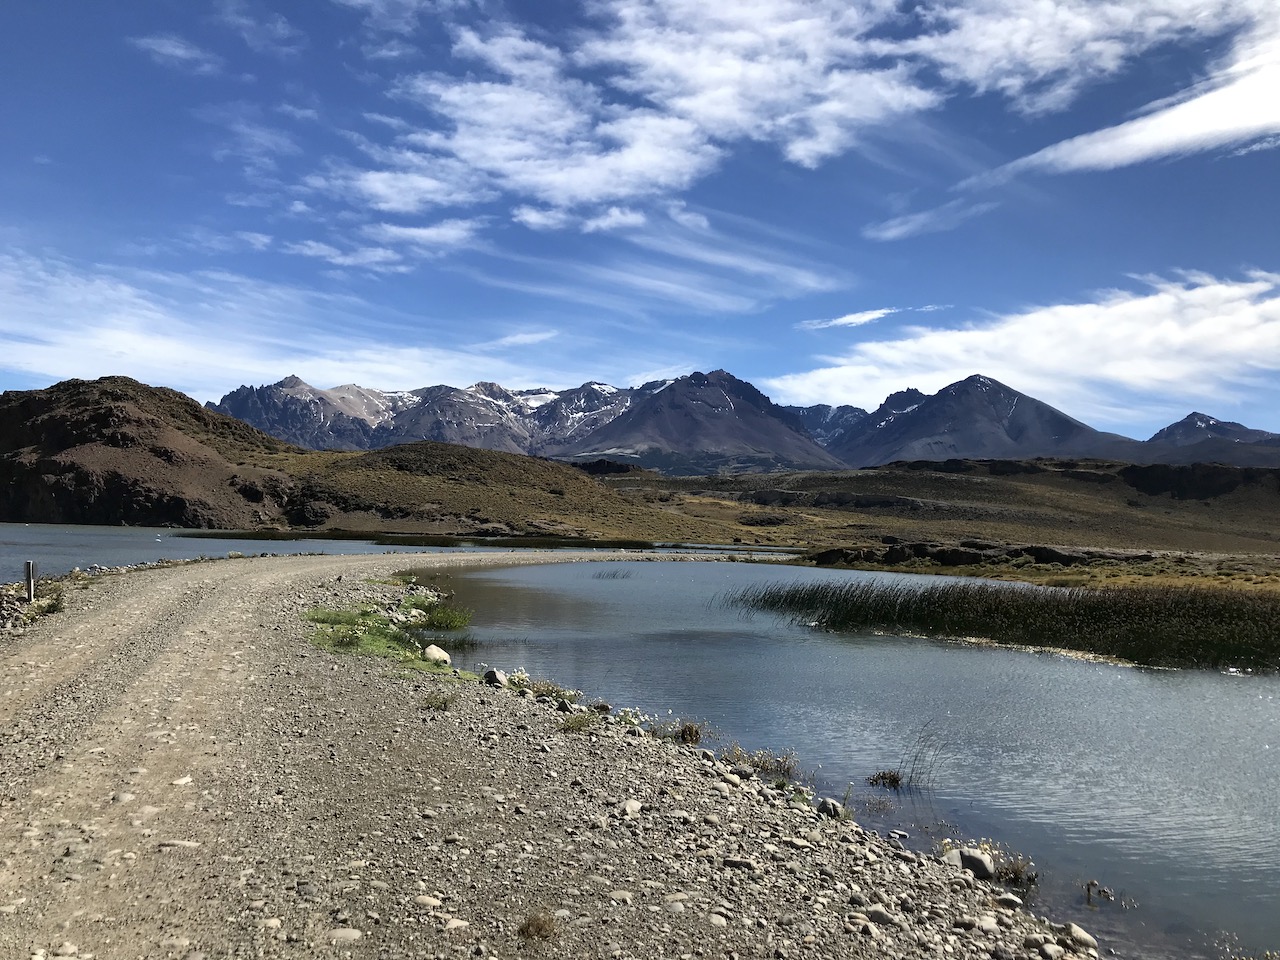 Viaggio Los Antiguos e Parco Nazionale della Patagonia